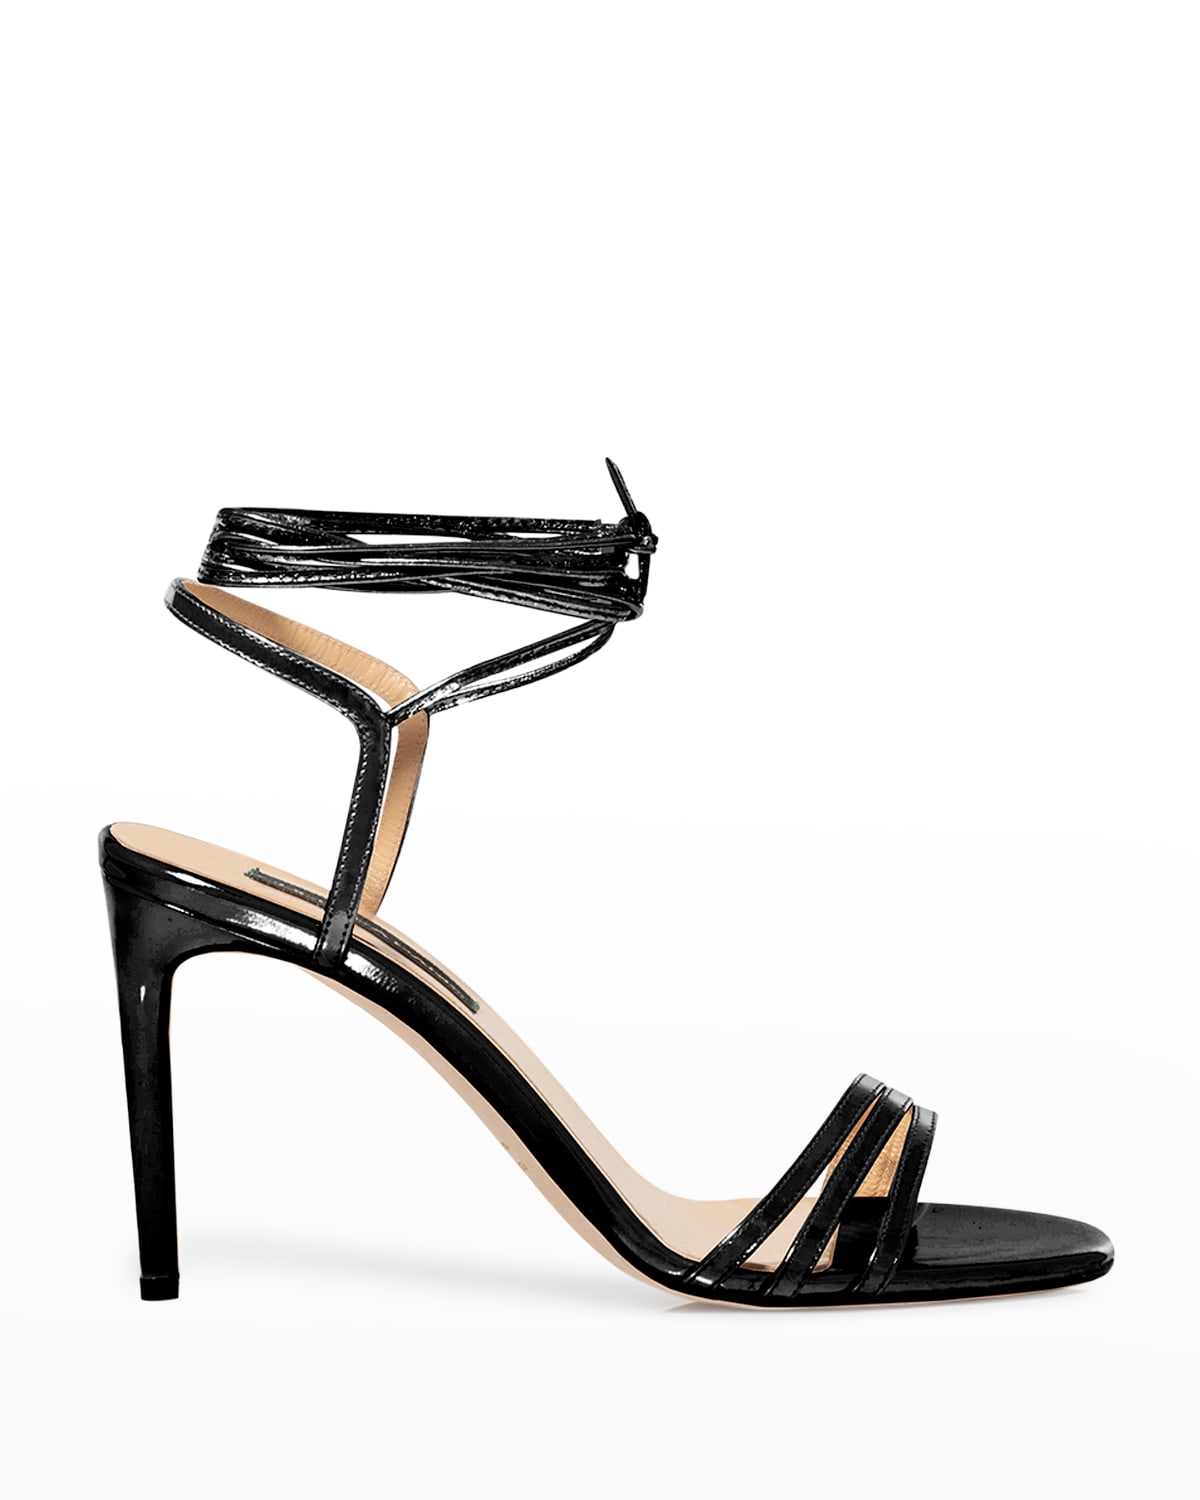 Chelsea Paris Sasha Strappy Leather Ankle-Tie Sandals